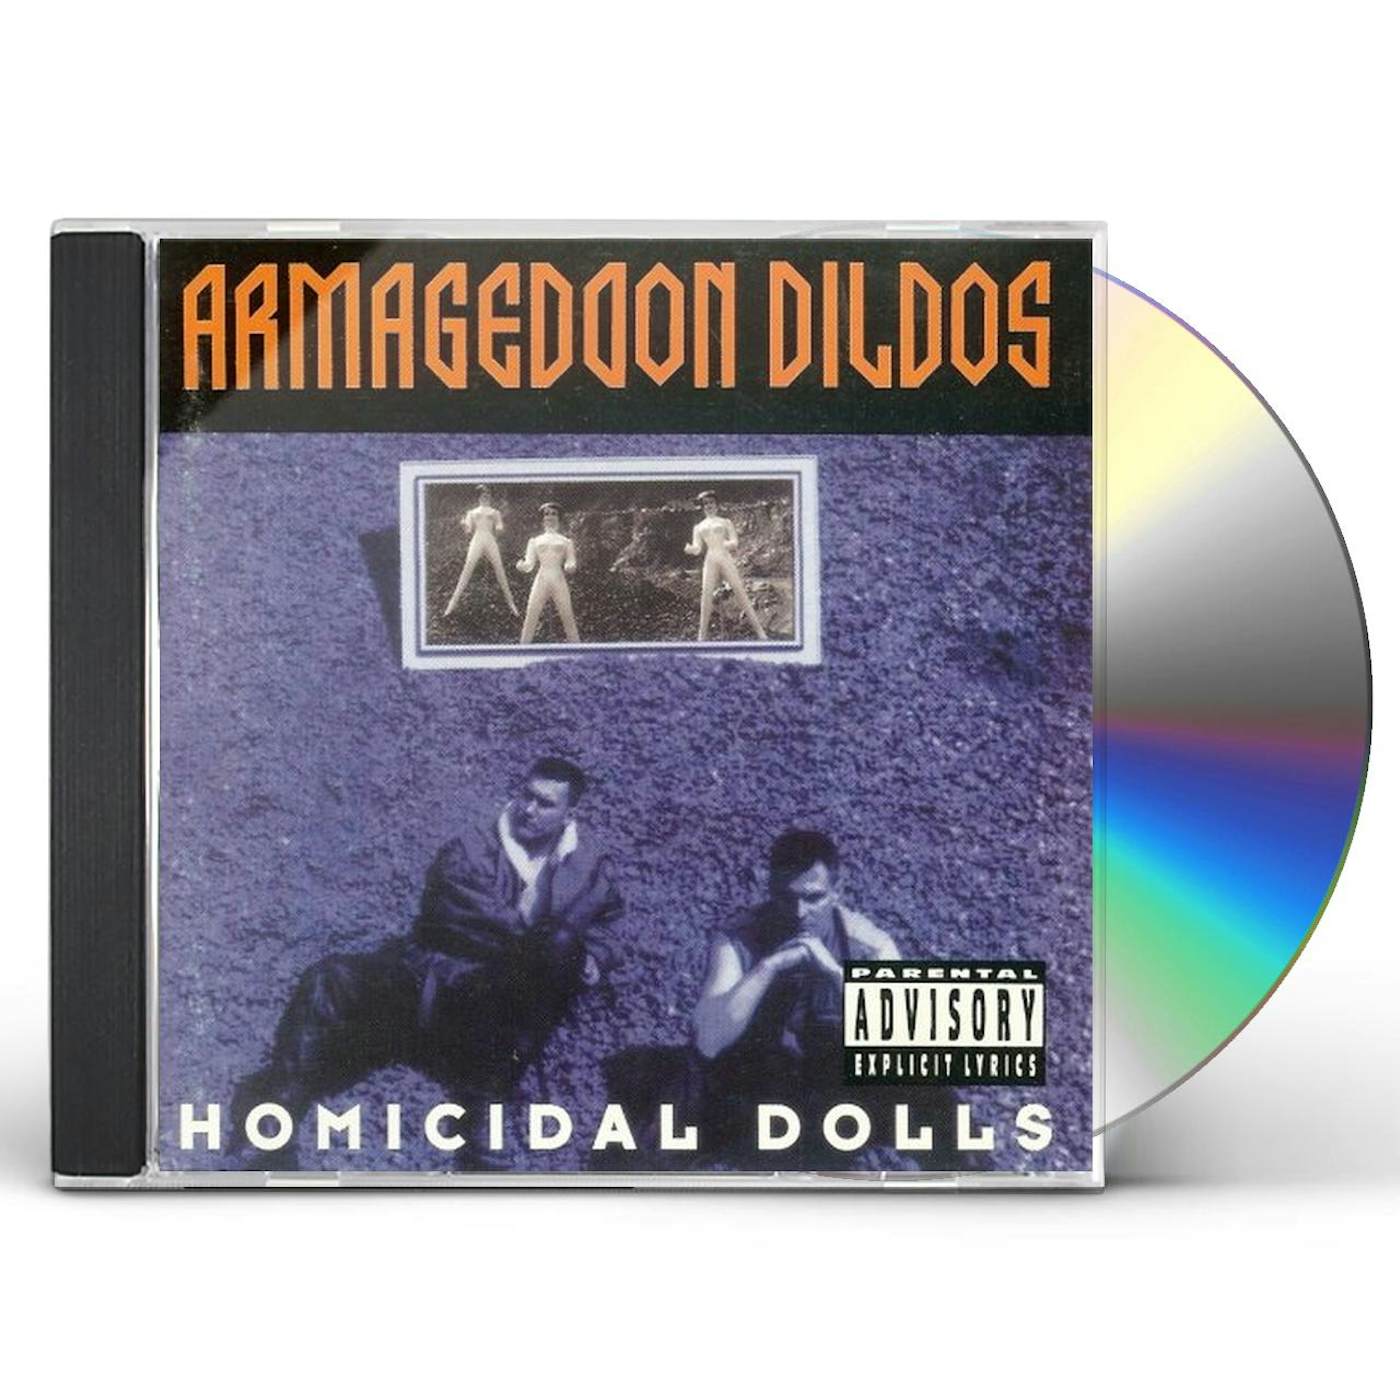 Armageddon Dildos HOMICIDAL DOLLS CD